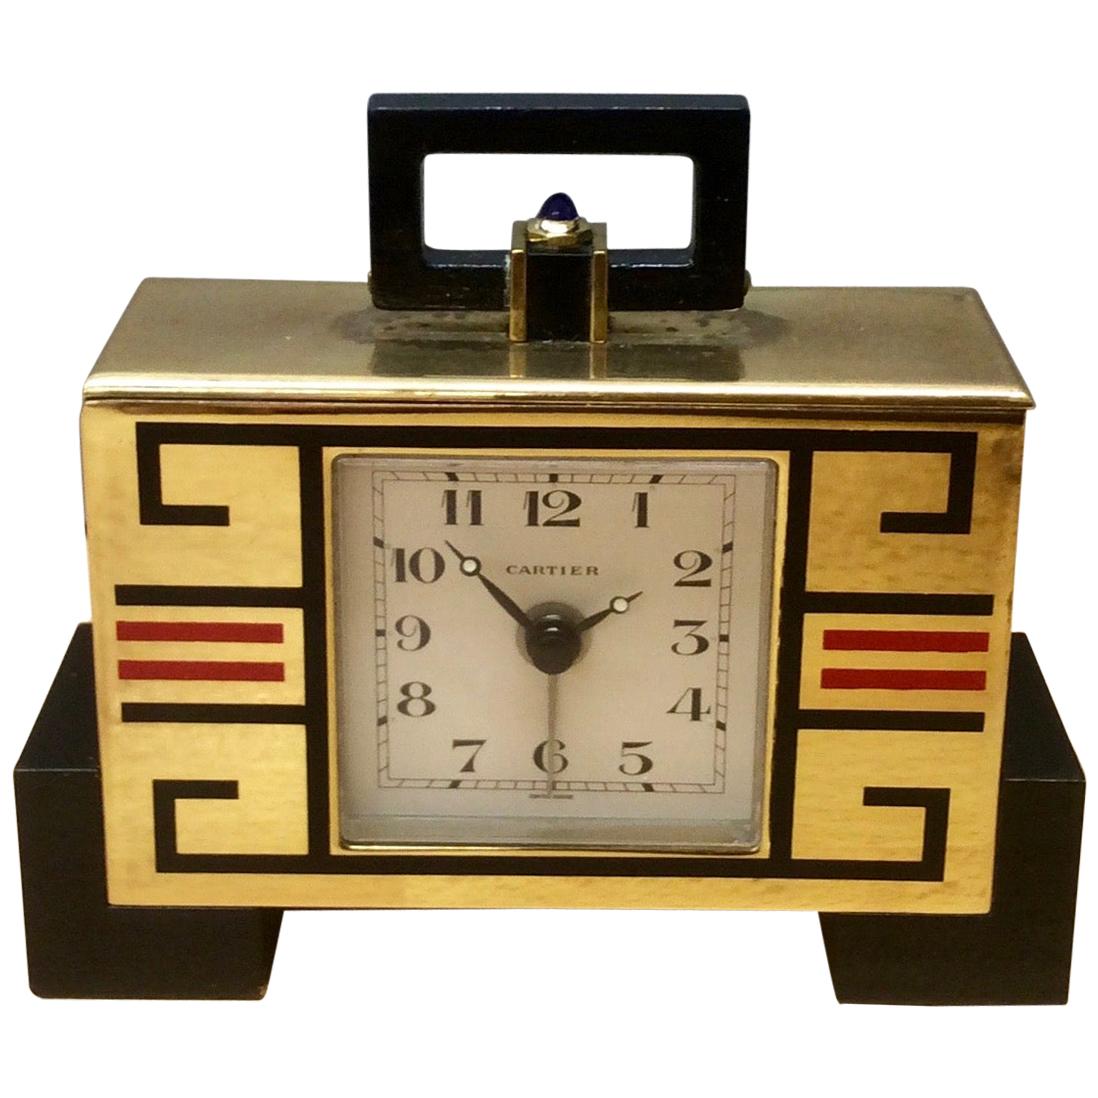 Cartier Art Deco Travel / Alarm Clock 